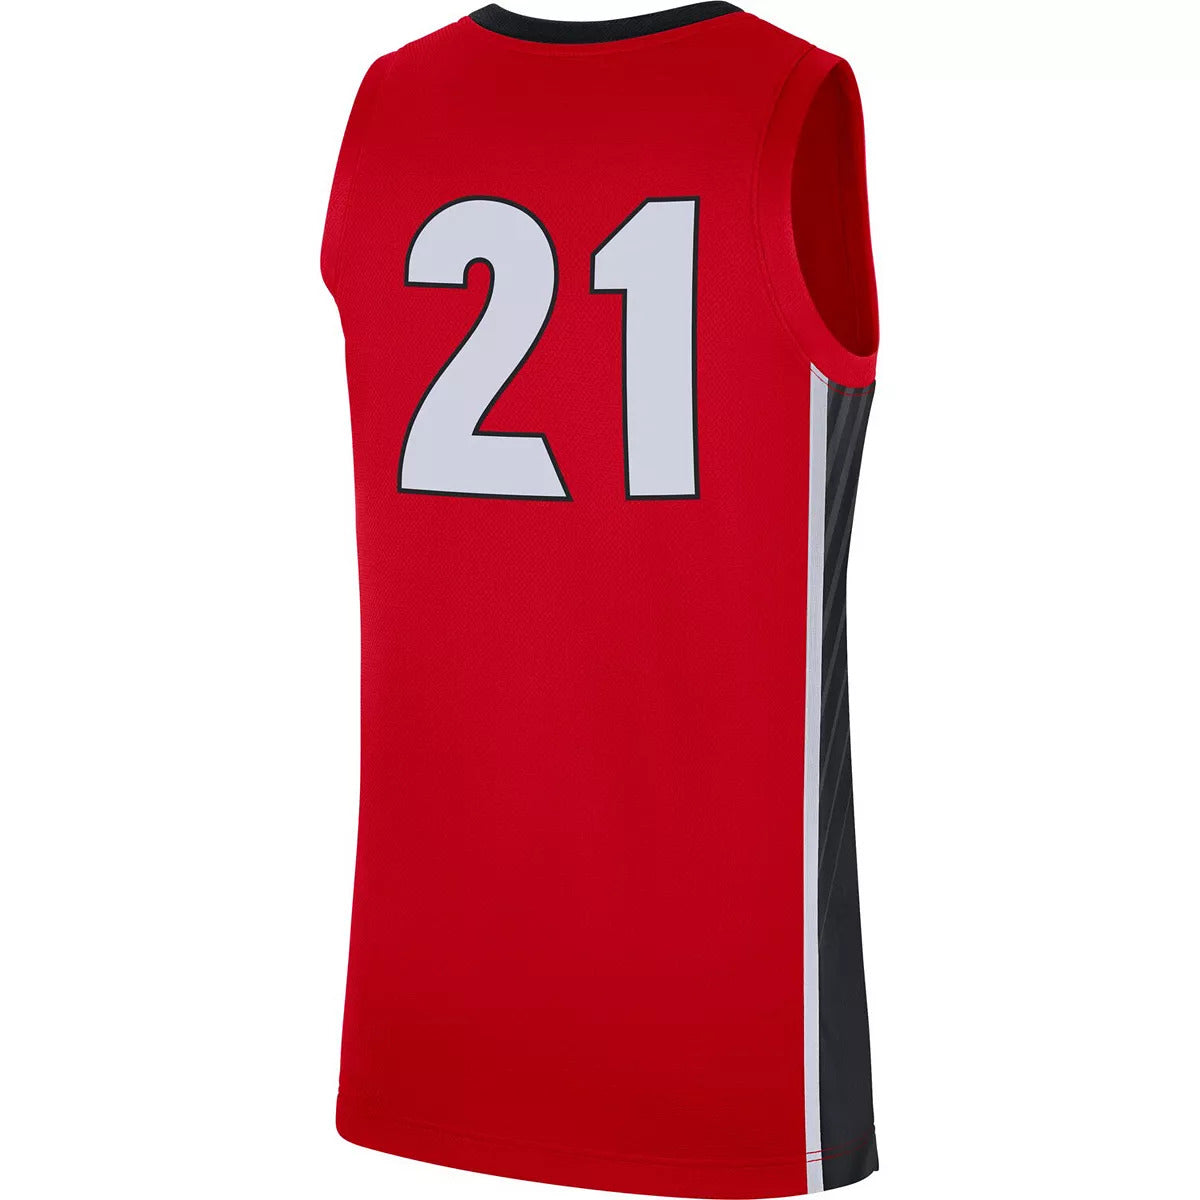 Men's Georgia Bulldogs Nike Replica #21 Basketball Jersey -Red